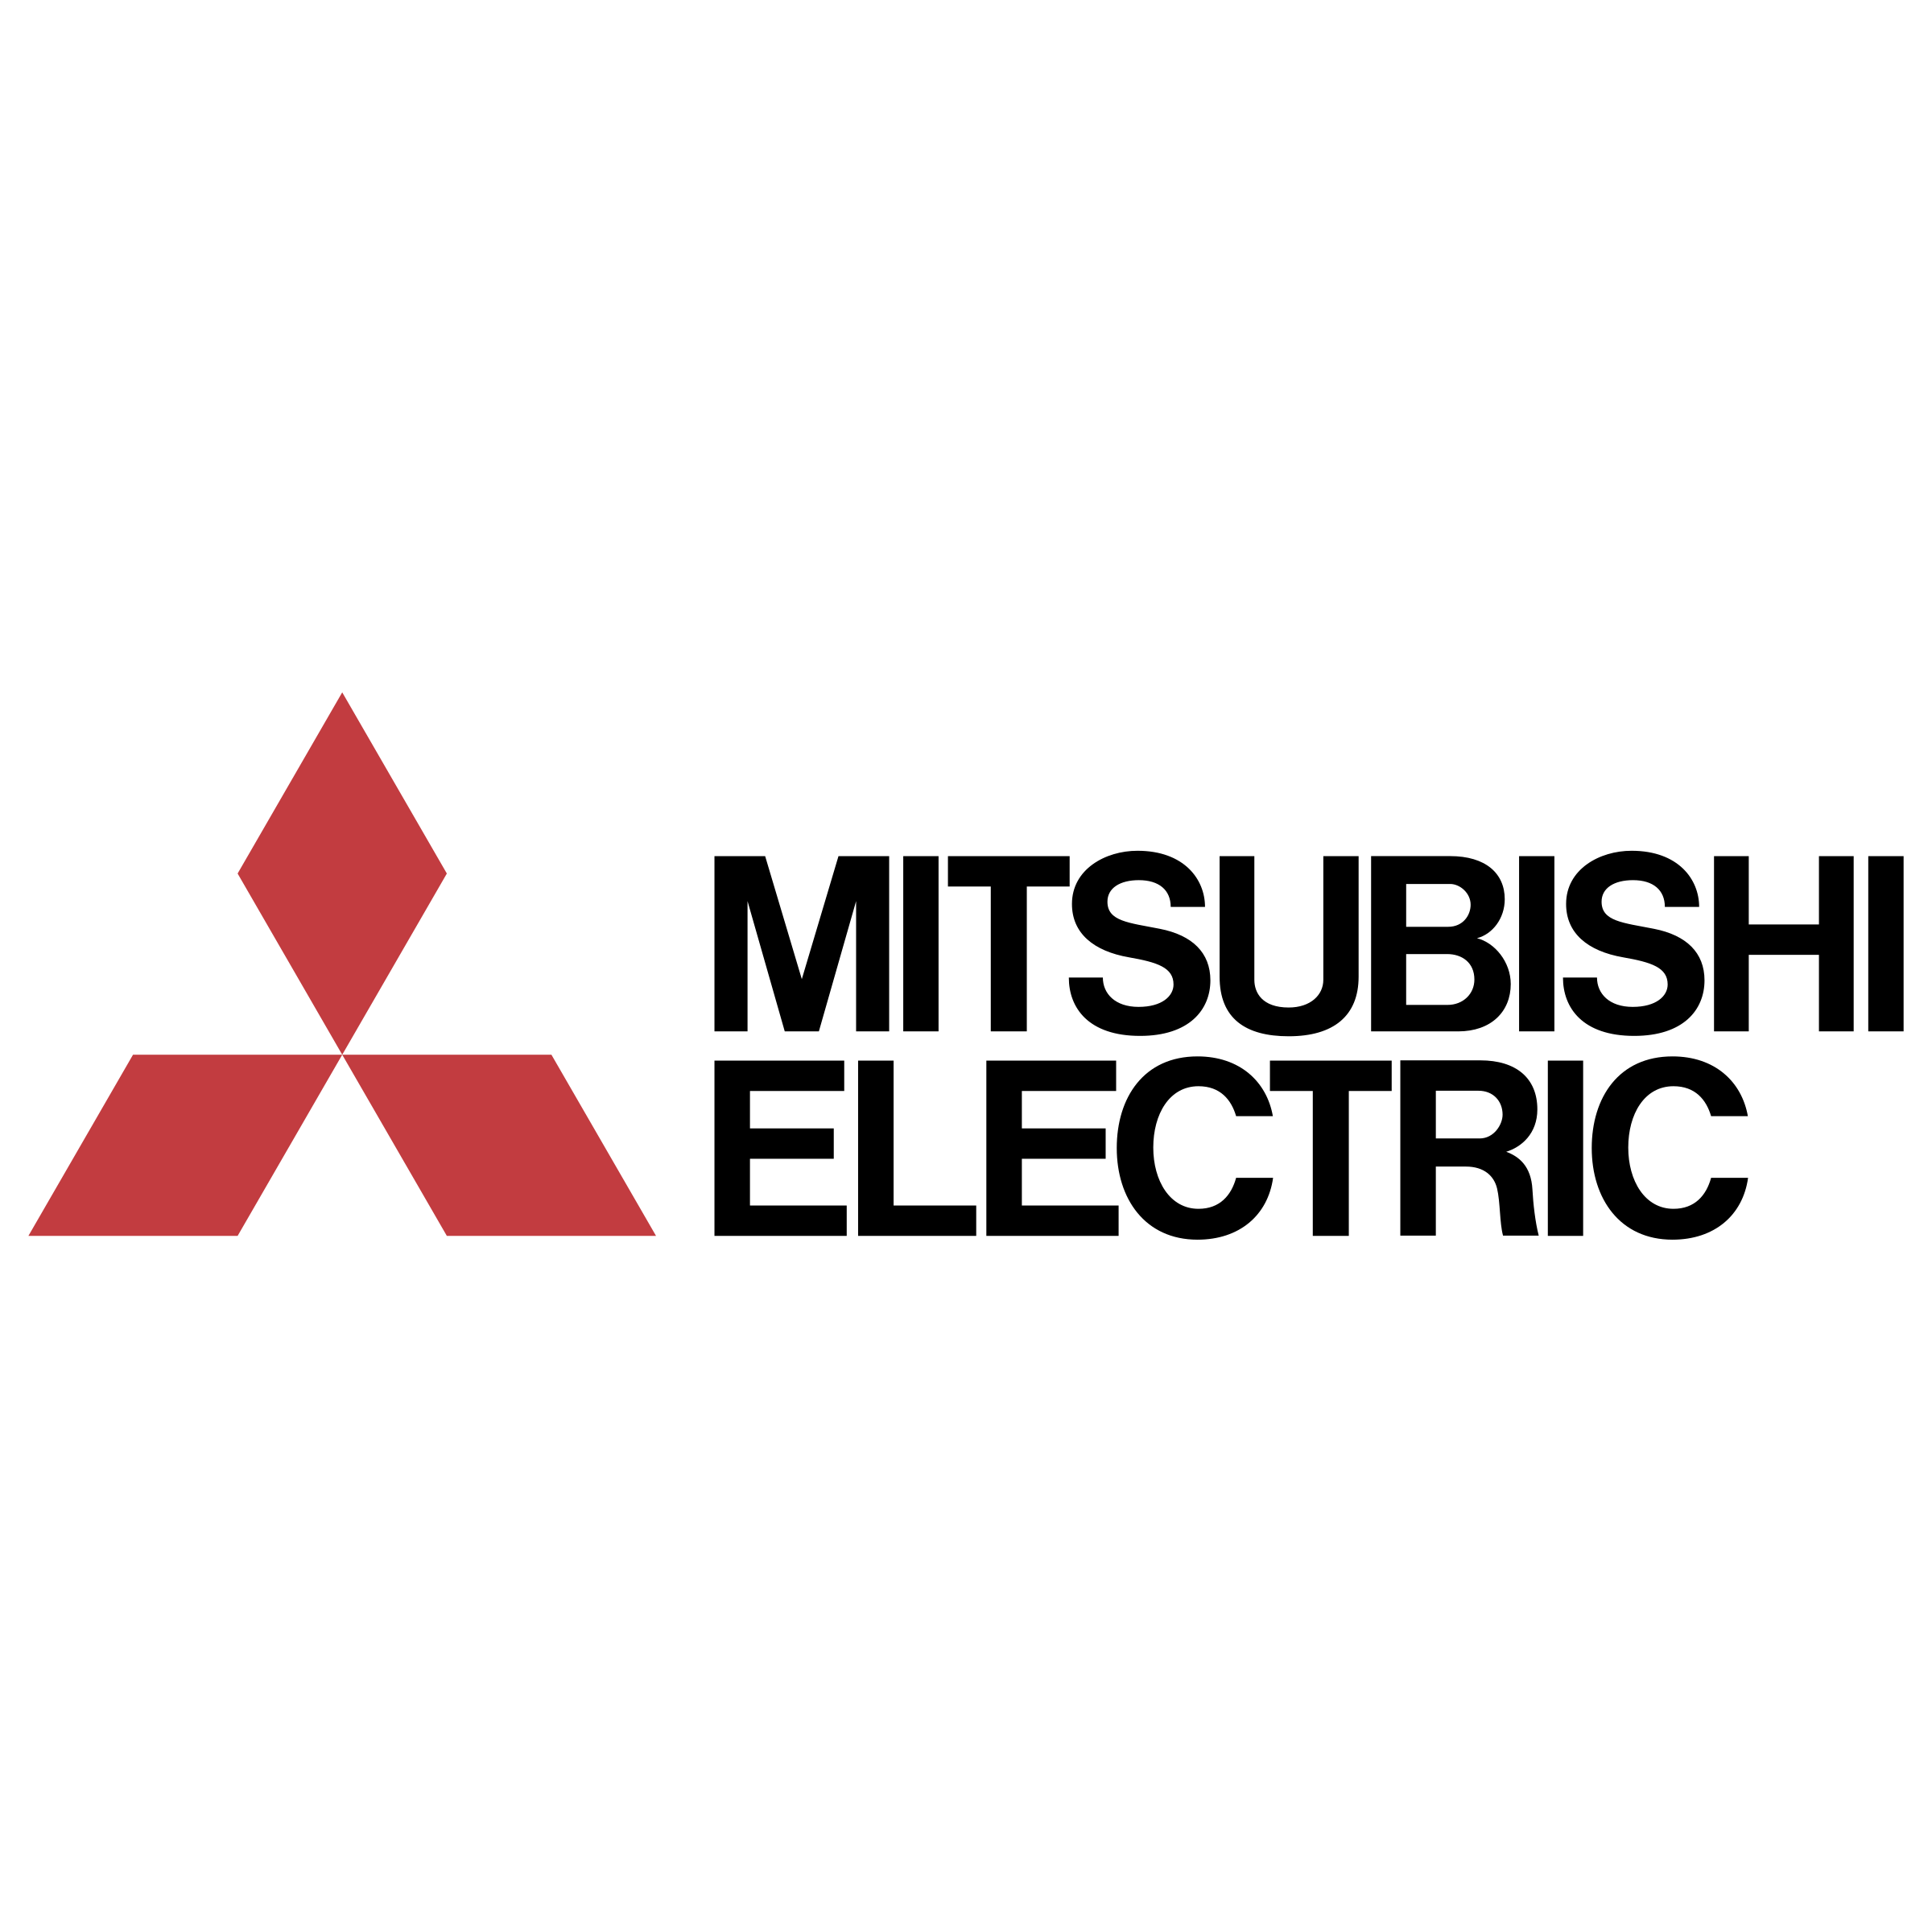 mitsubishi-electric-logo-png-transparent.png